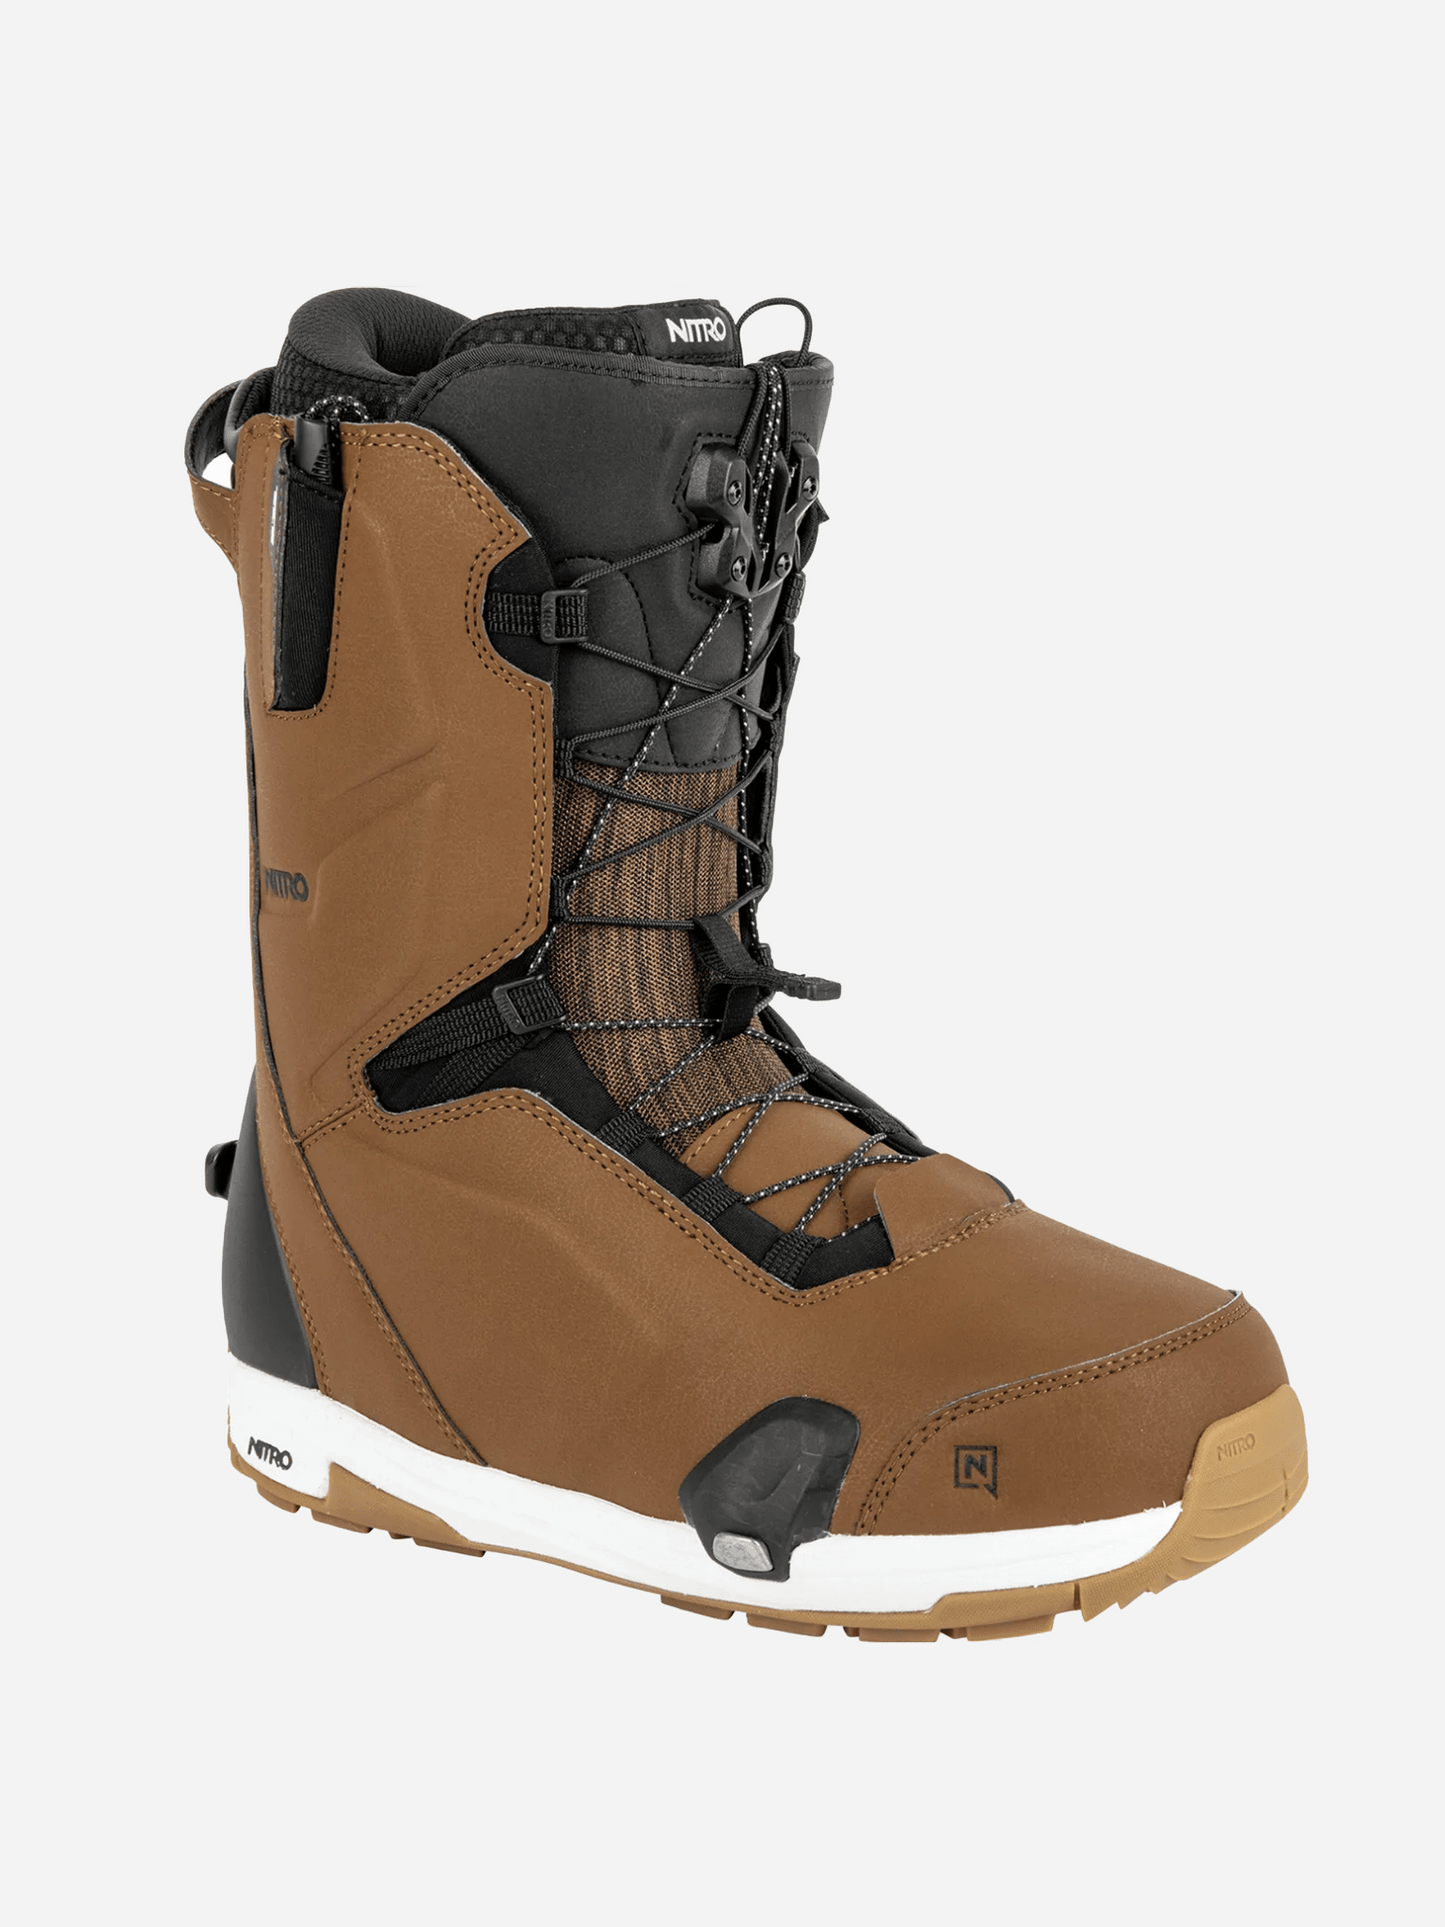 Nitro Men's Profile TLS Step On Snowboard Boots 2023